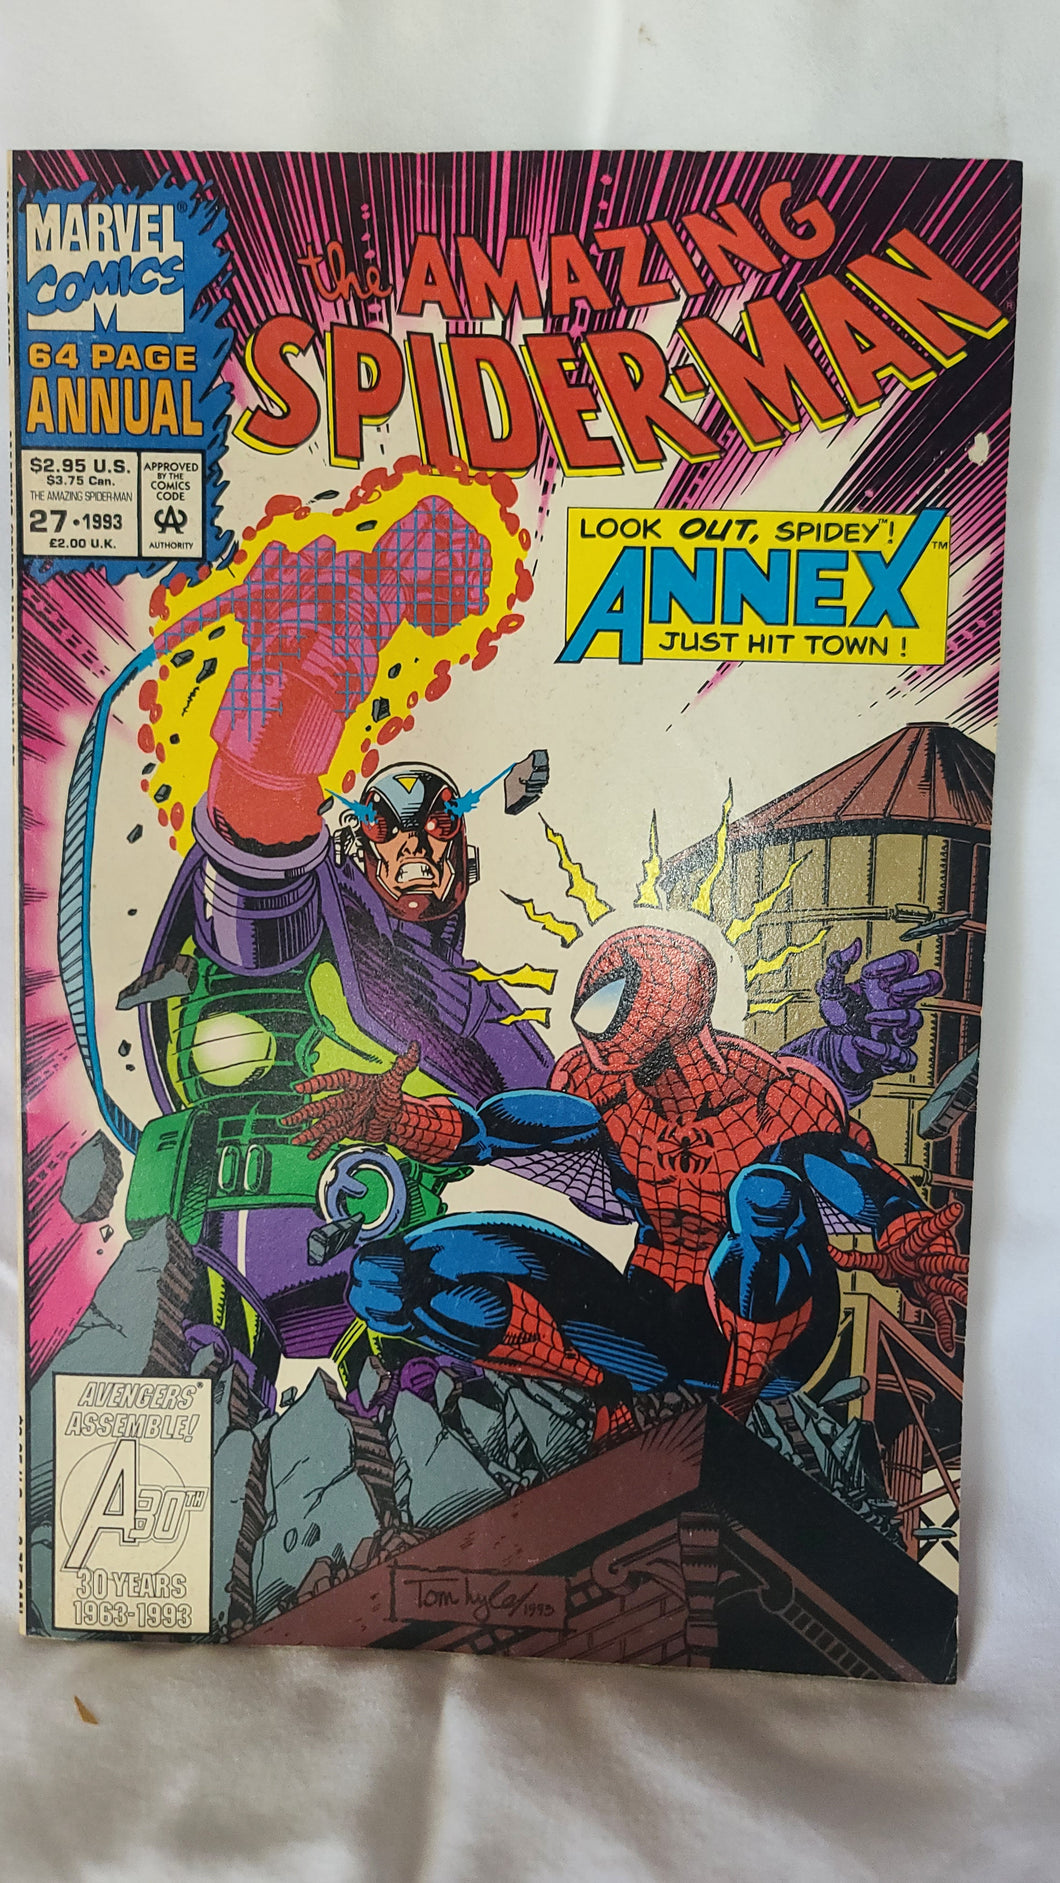 Amazing Spider-Man Marvel Comics 64pg Annual Vol 1 No. 27 1993